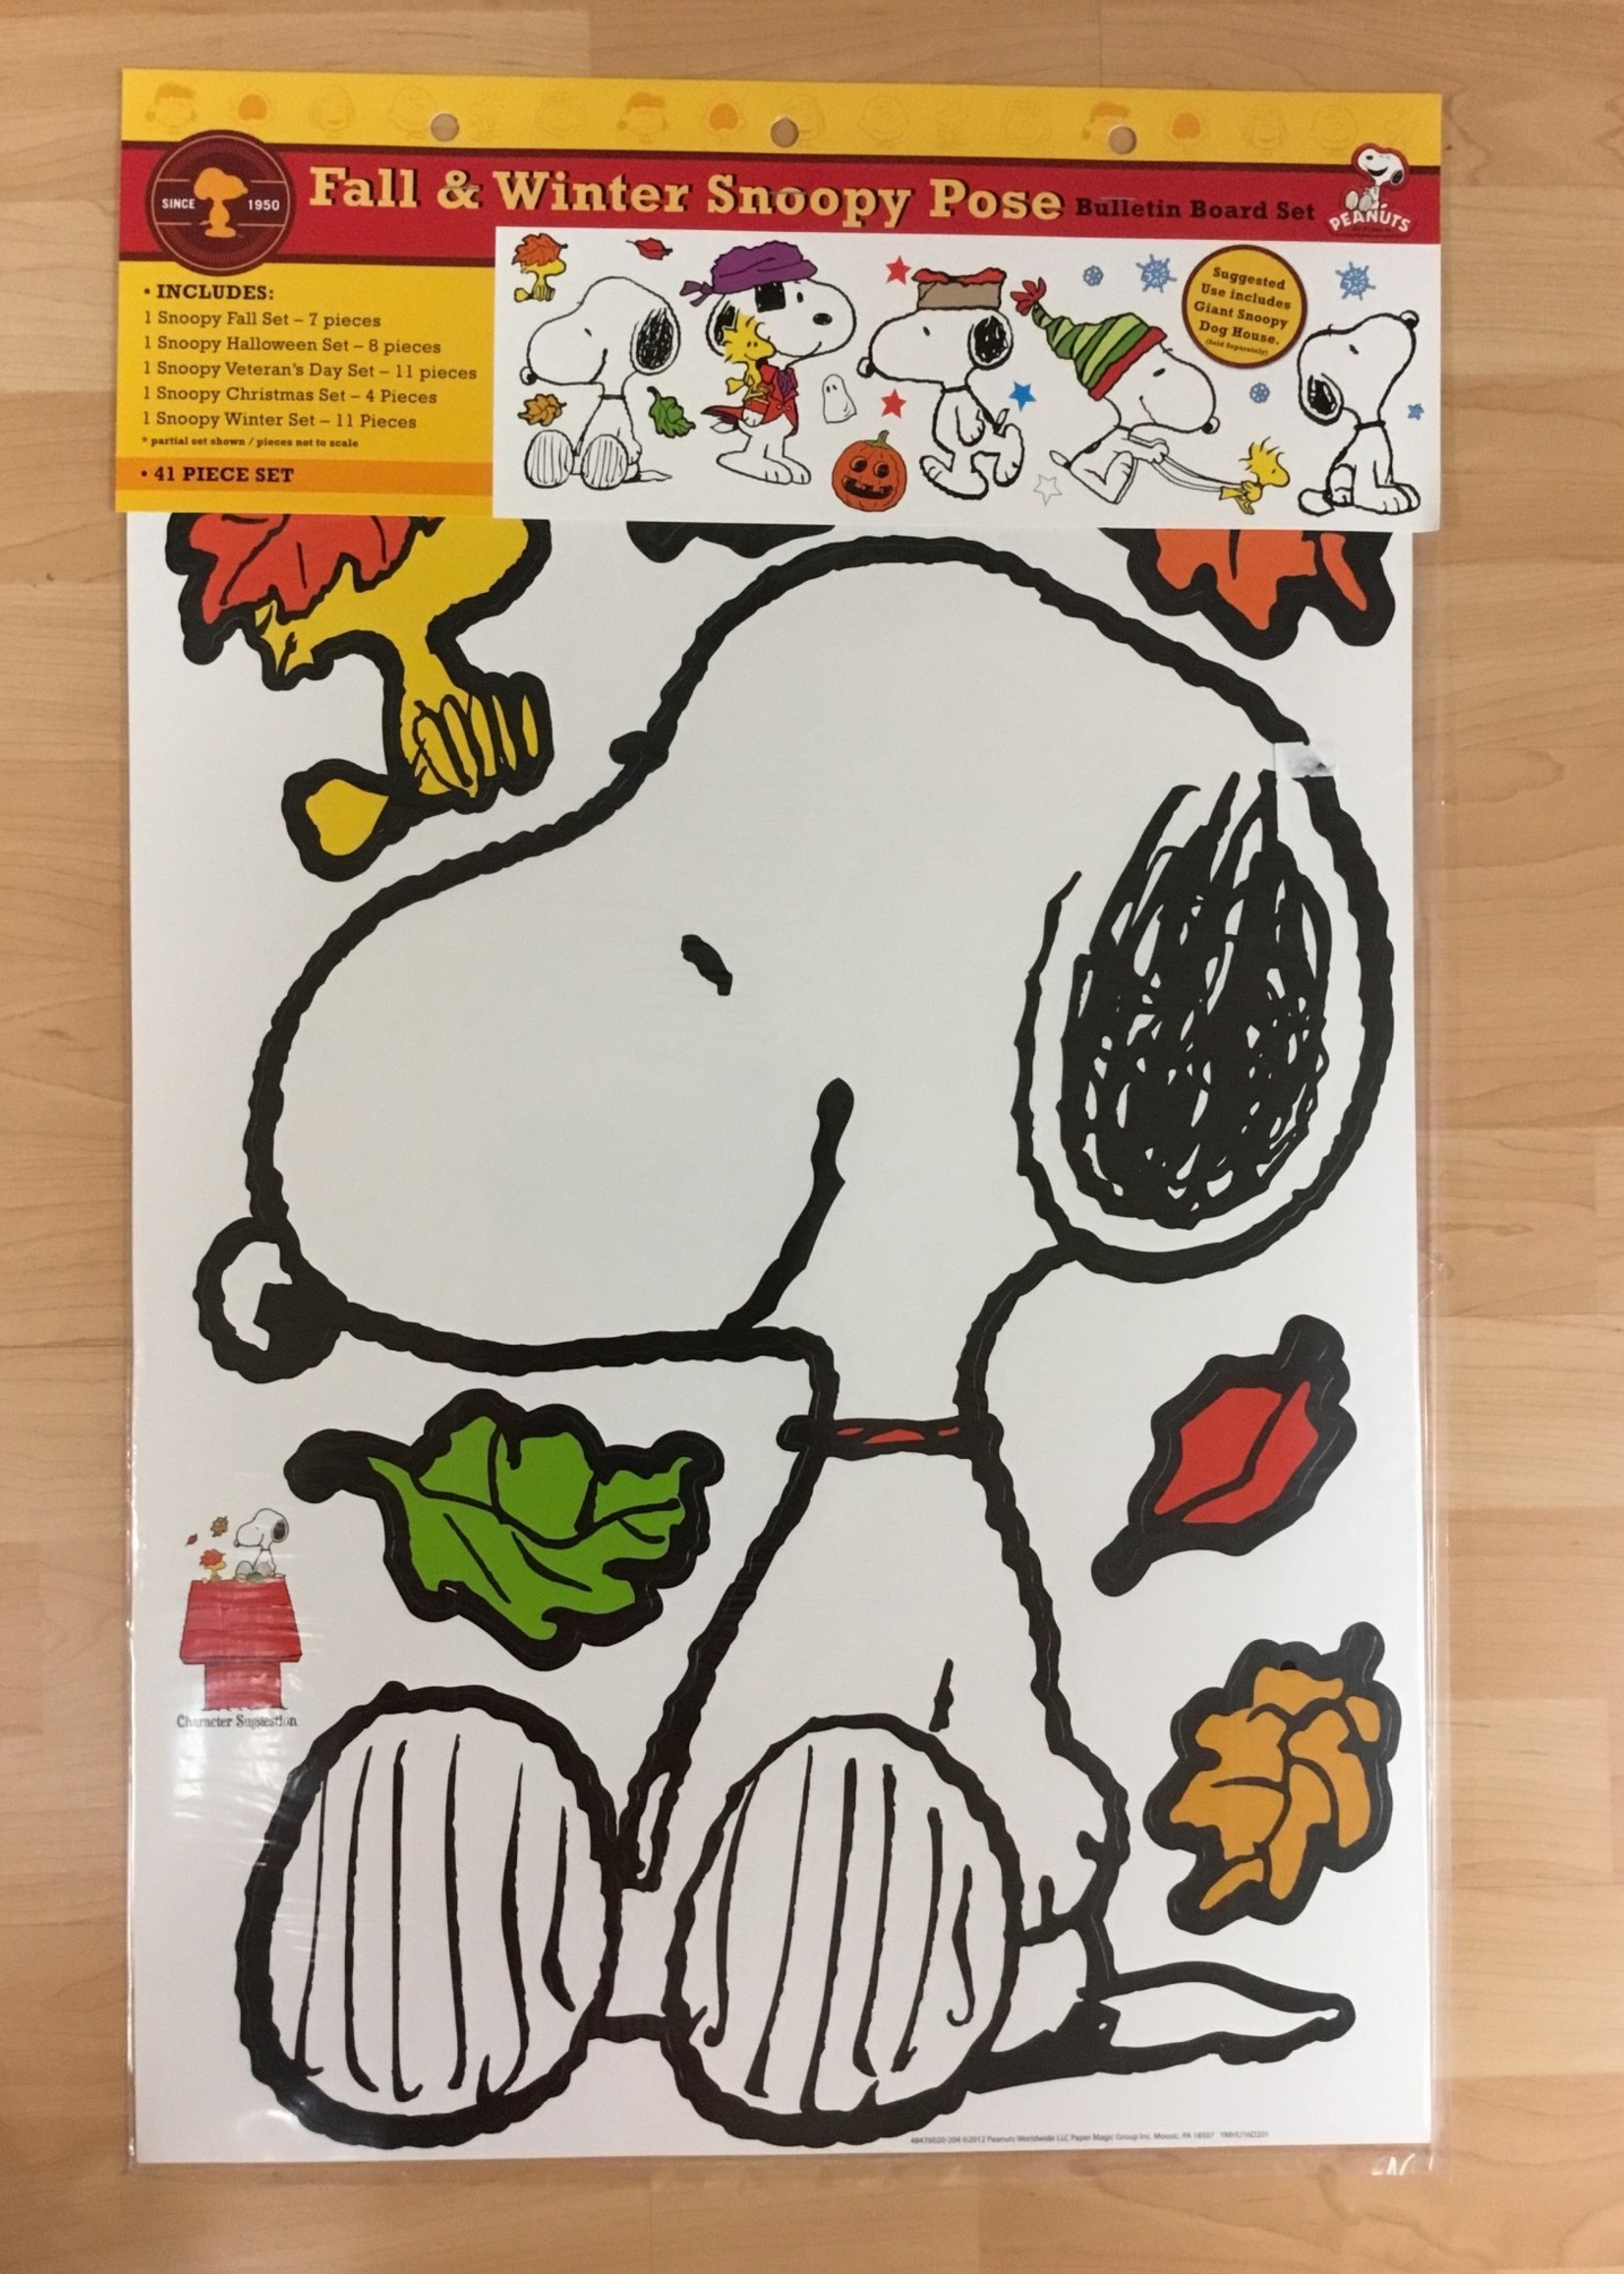 Fall & Winter Snoopy Pose Peanuts Bulletin Board